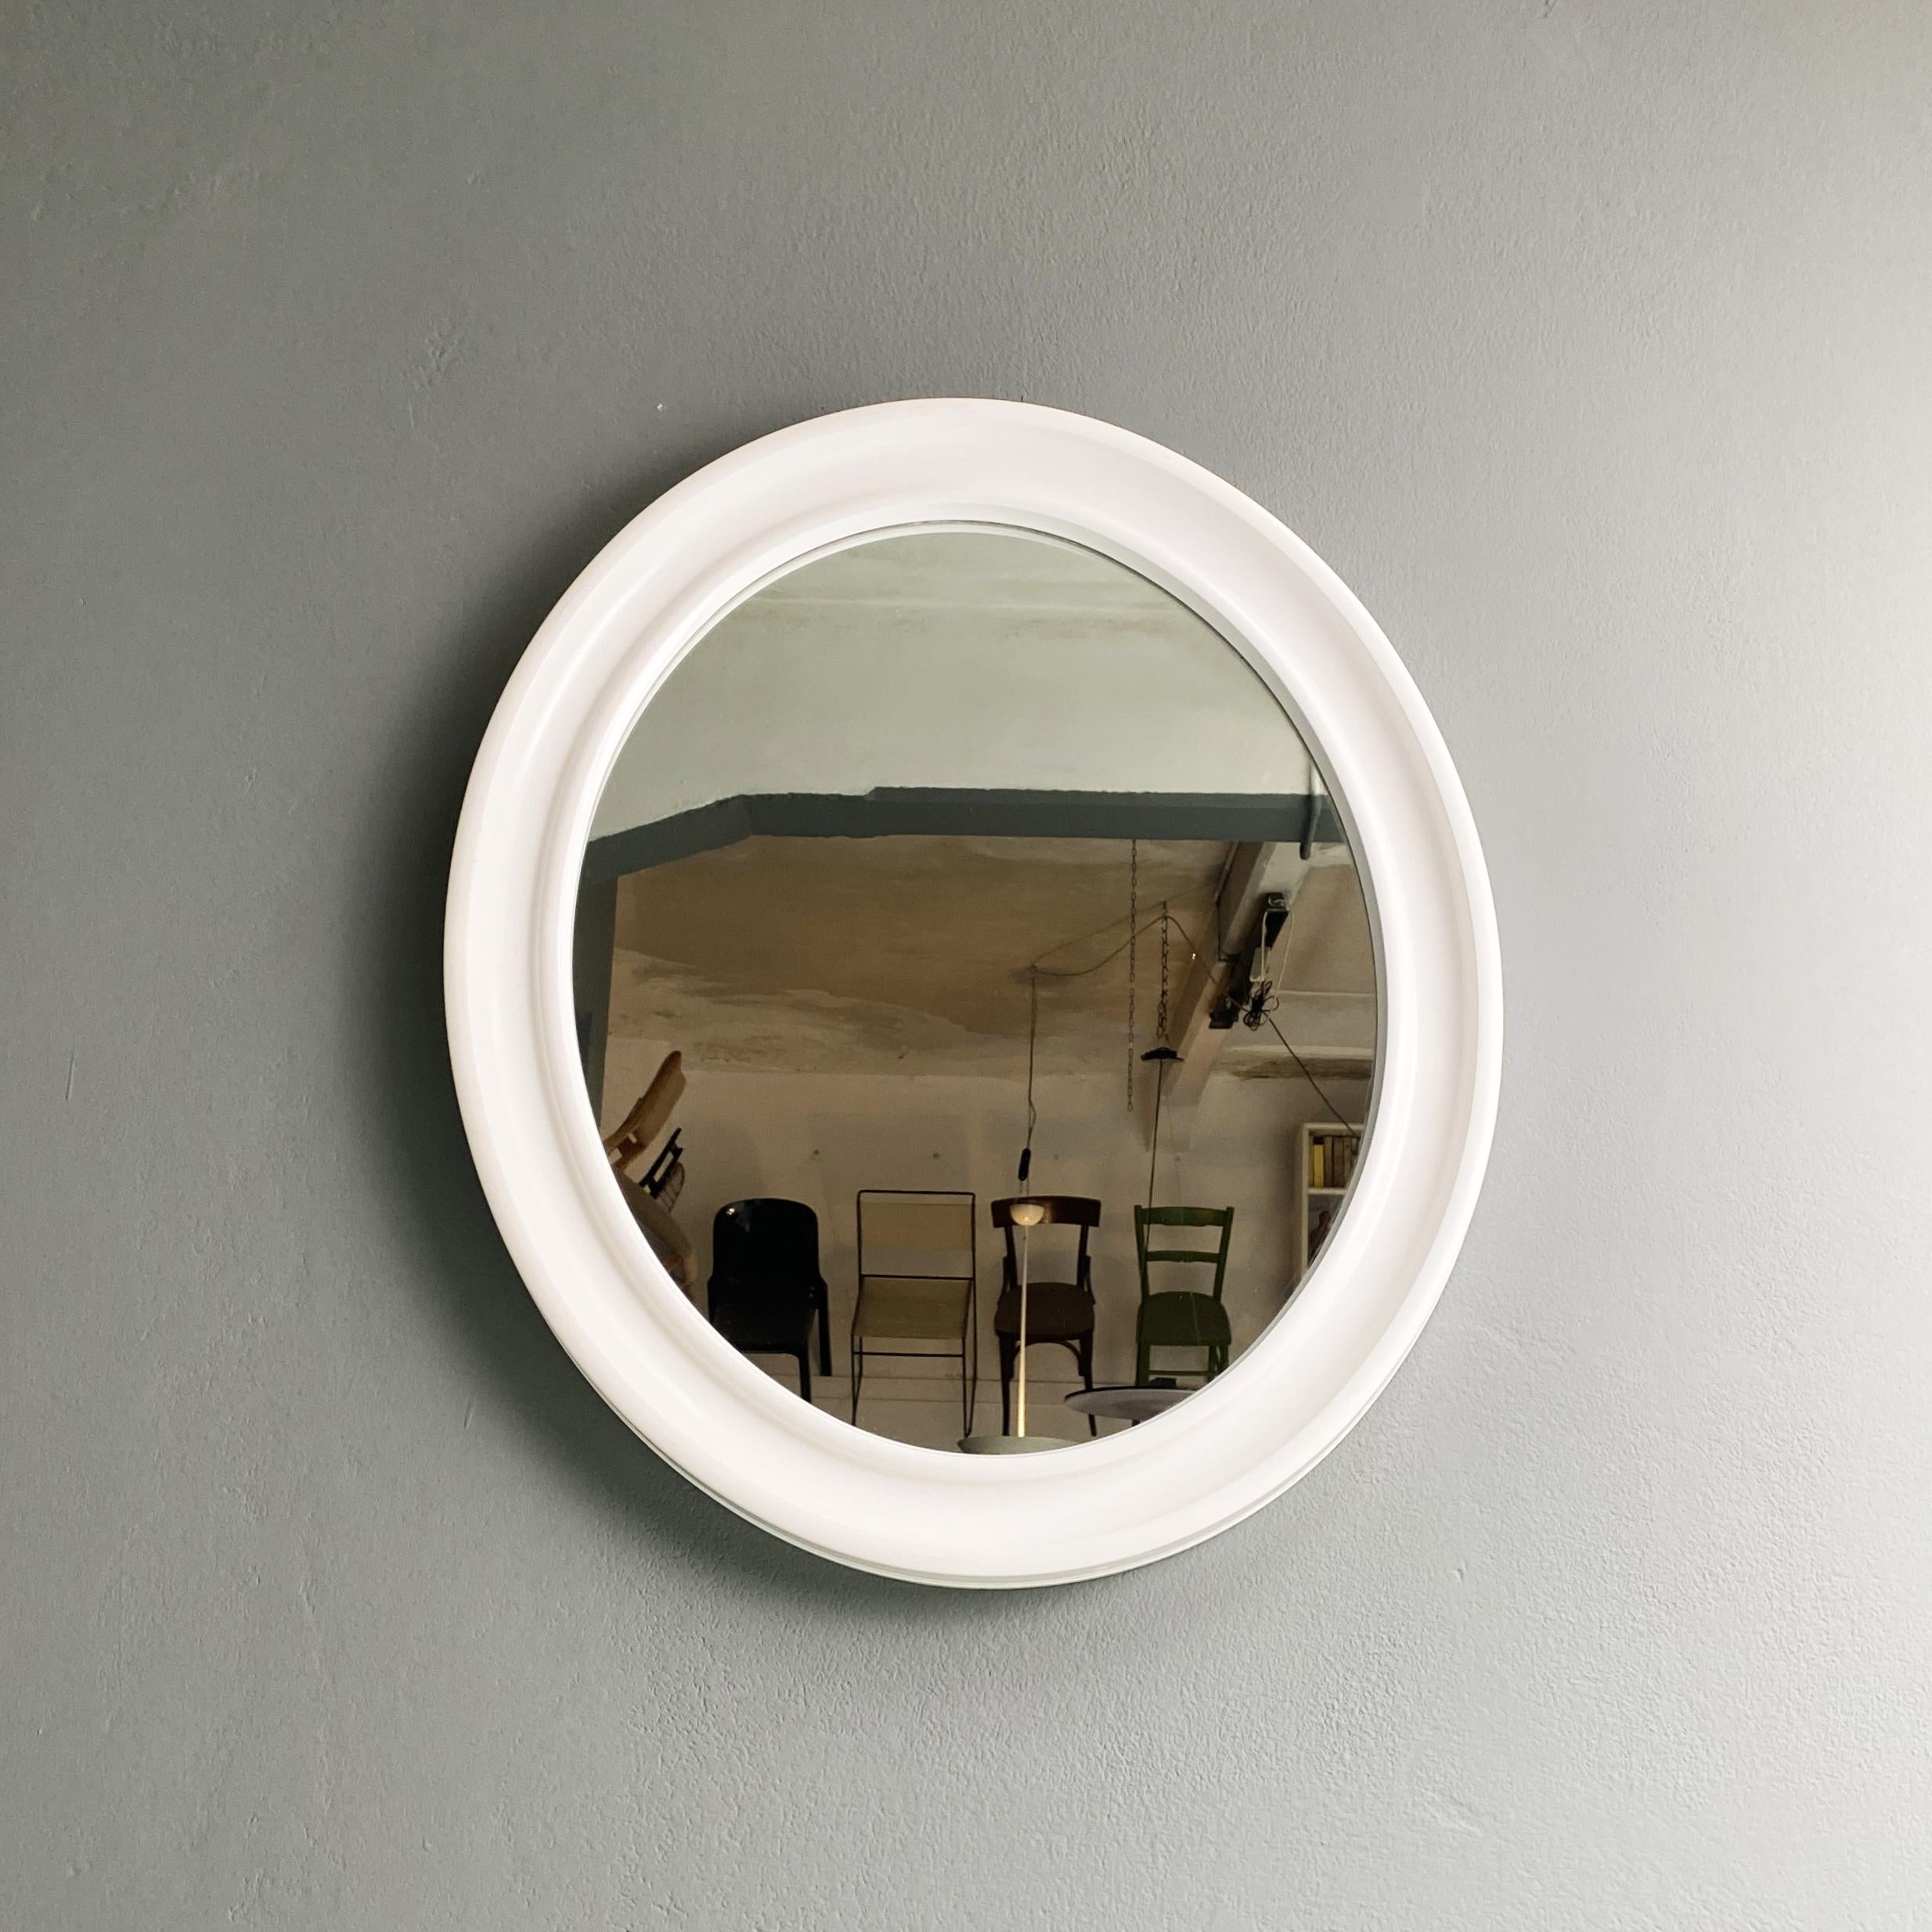 Oval mirror in white plastic by Carrara & Matta, 1980s
Medium size oval mirror in white plastic frame. Manufactured by Carrara & Matta.
1980s

Good conditions

Measures in cm 57x5x67.